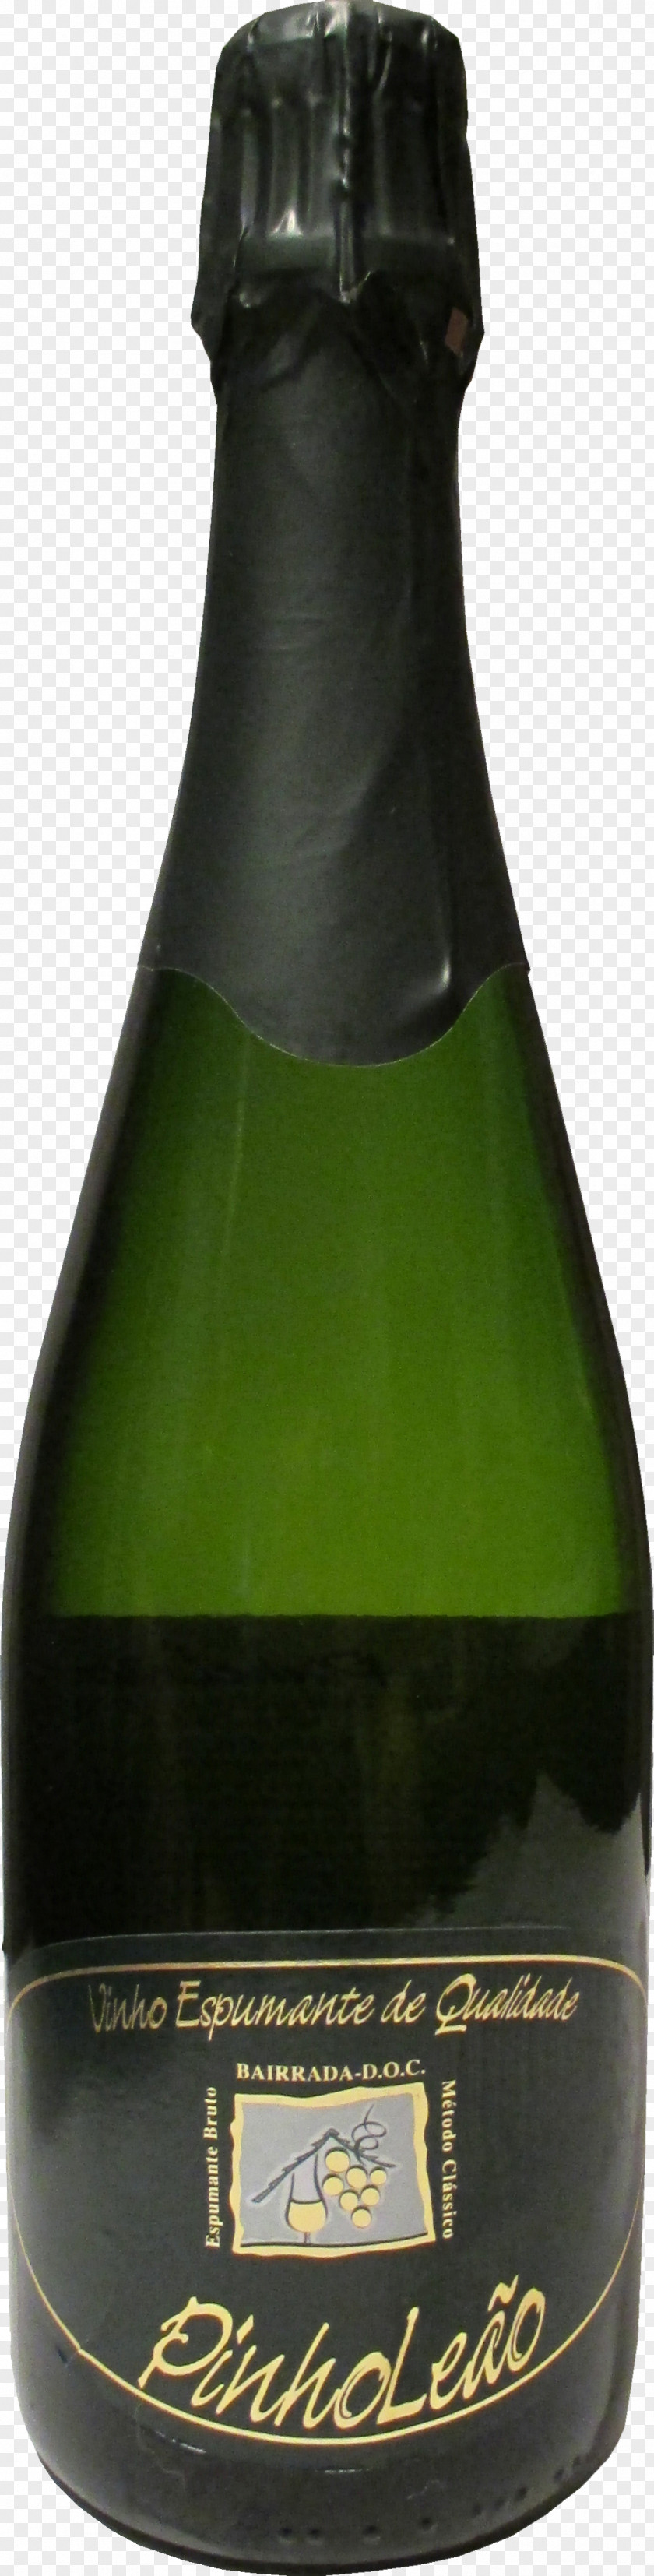 Champagne Dessert Wine Glass Bottle Liqueur PNG